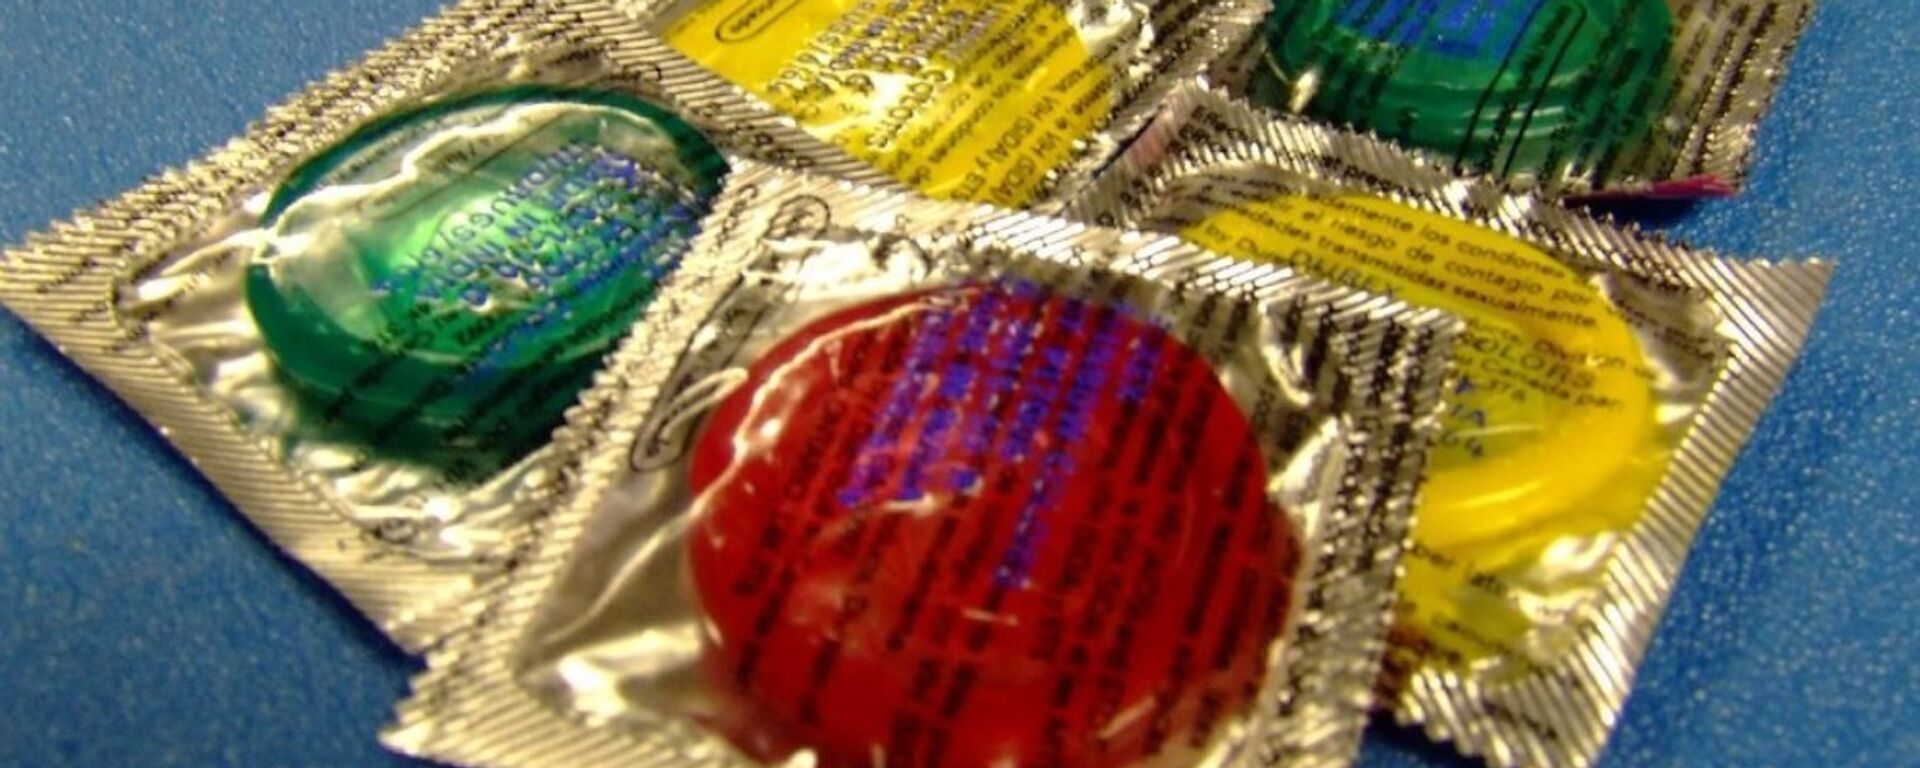 kondom - Sputnik Türkiye, 1920, 08.10.2021